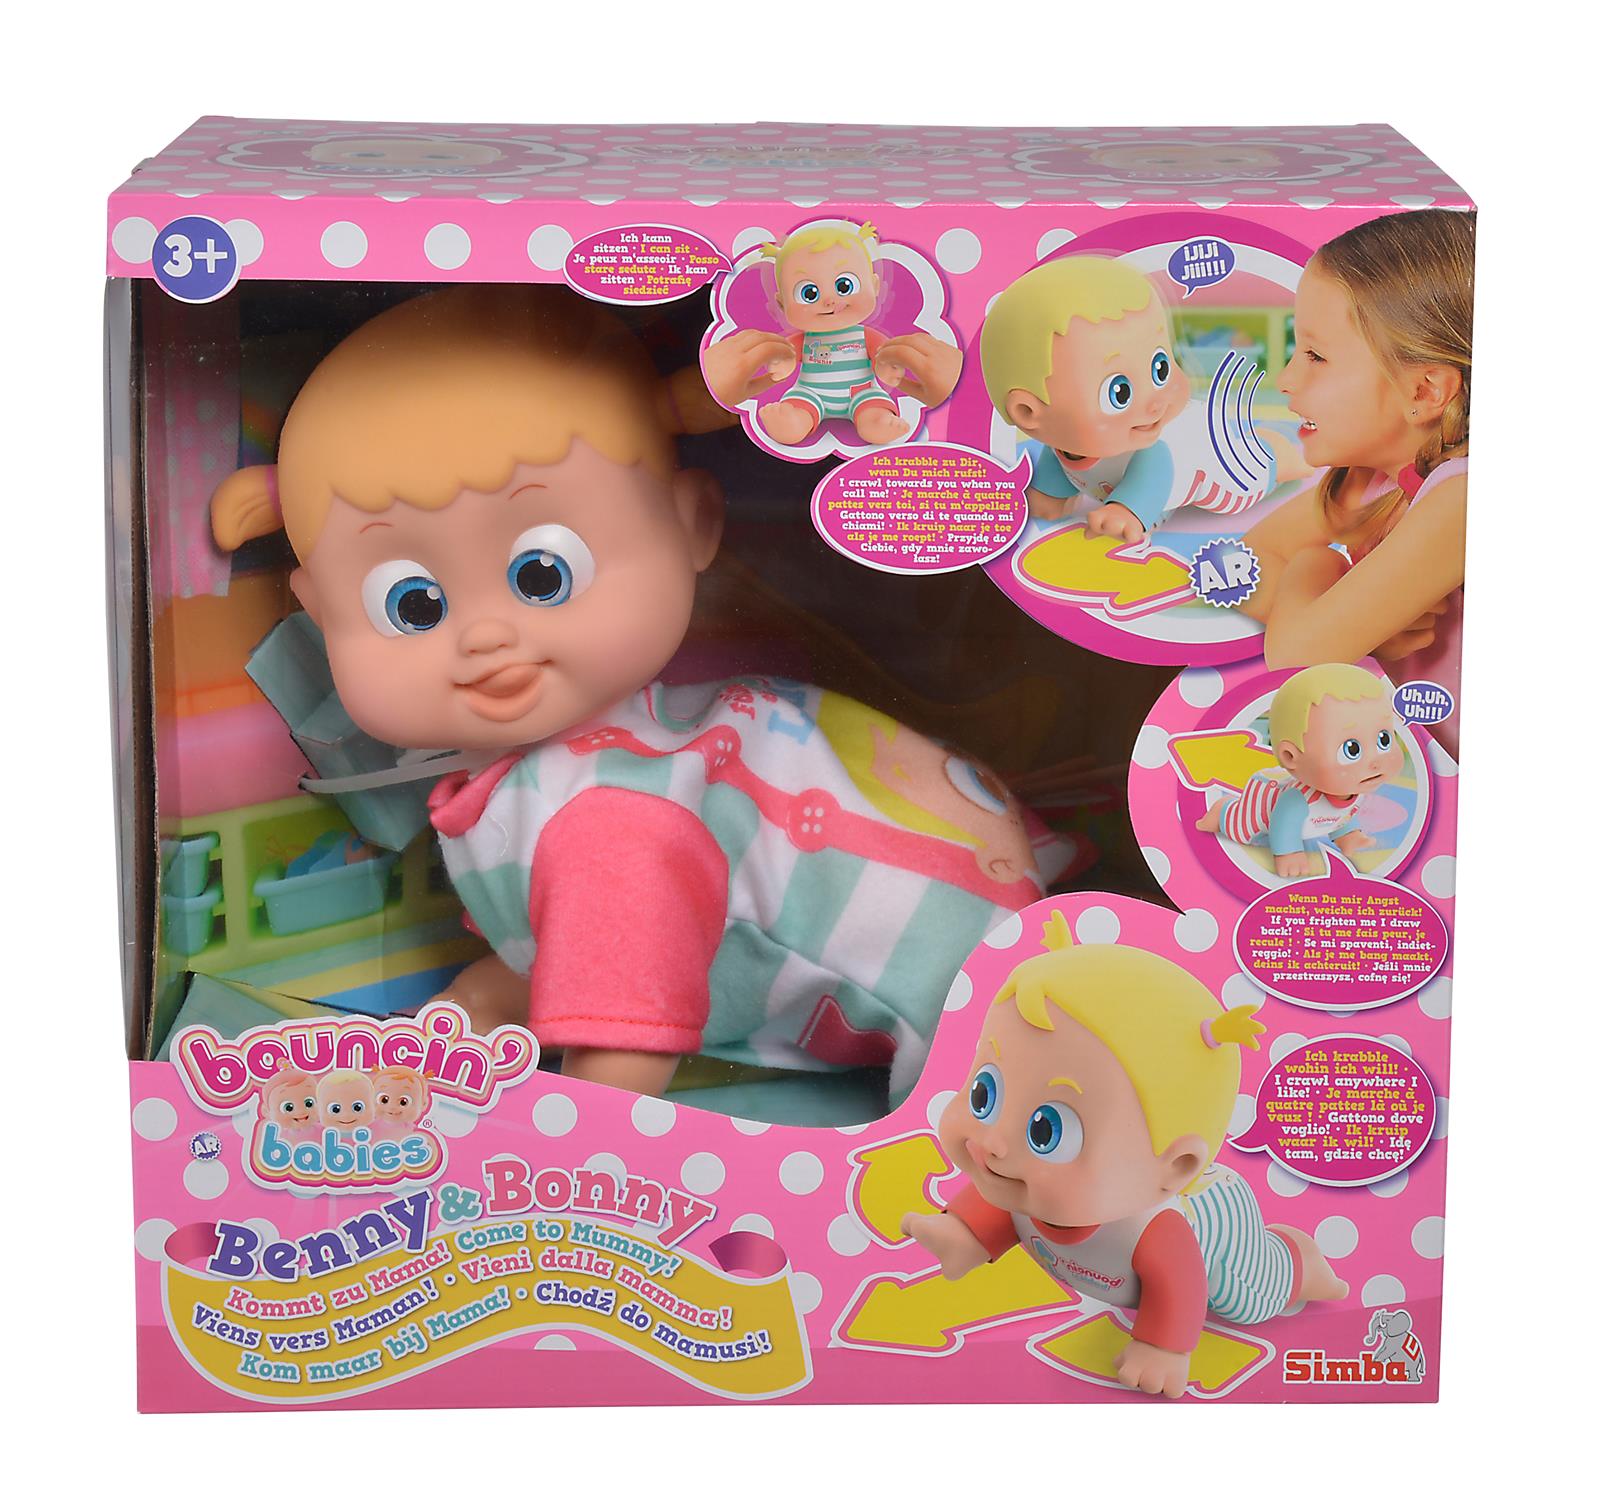 105143250  Simba Baby Bonny kommt zu Mama Babypuppe Puppe 